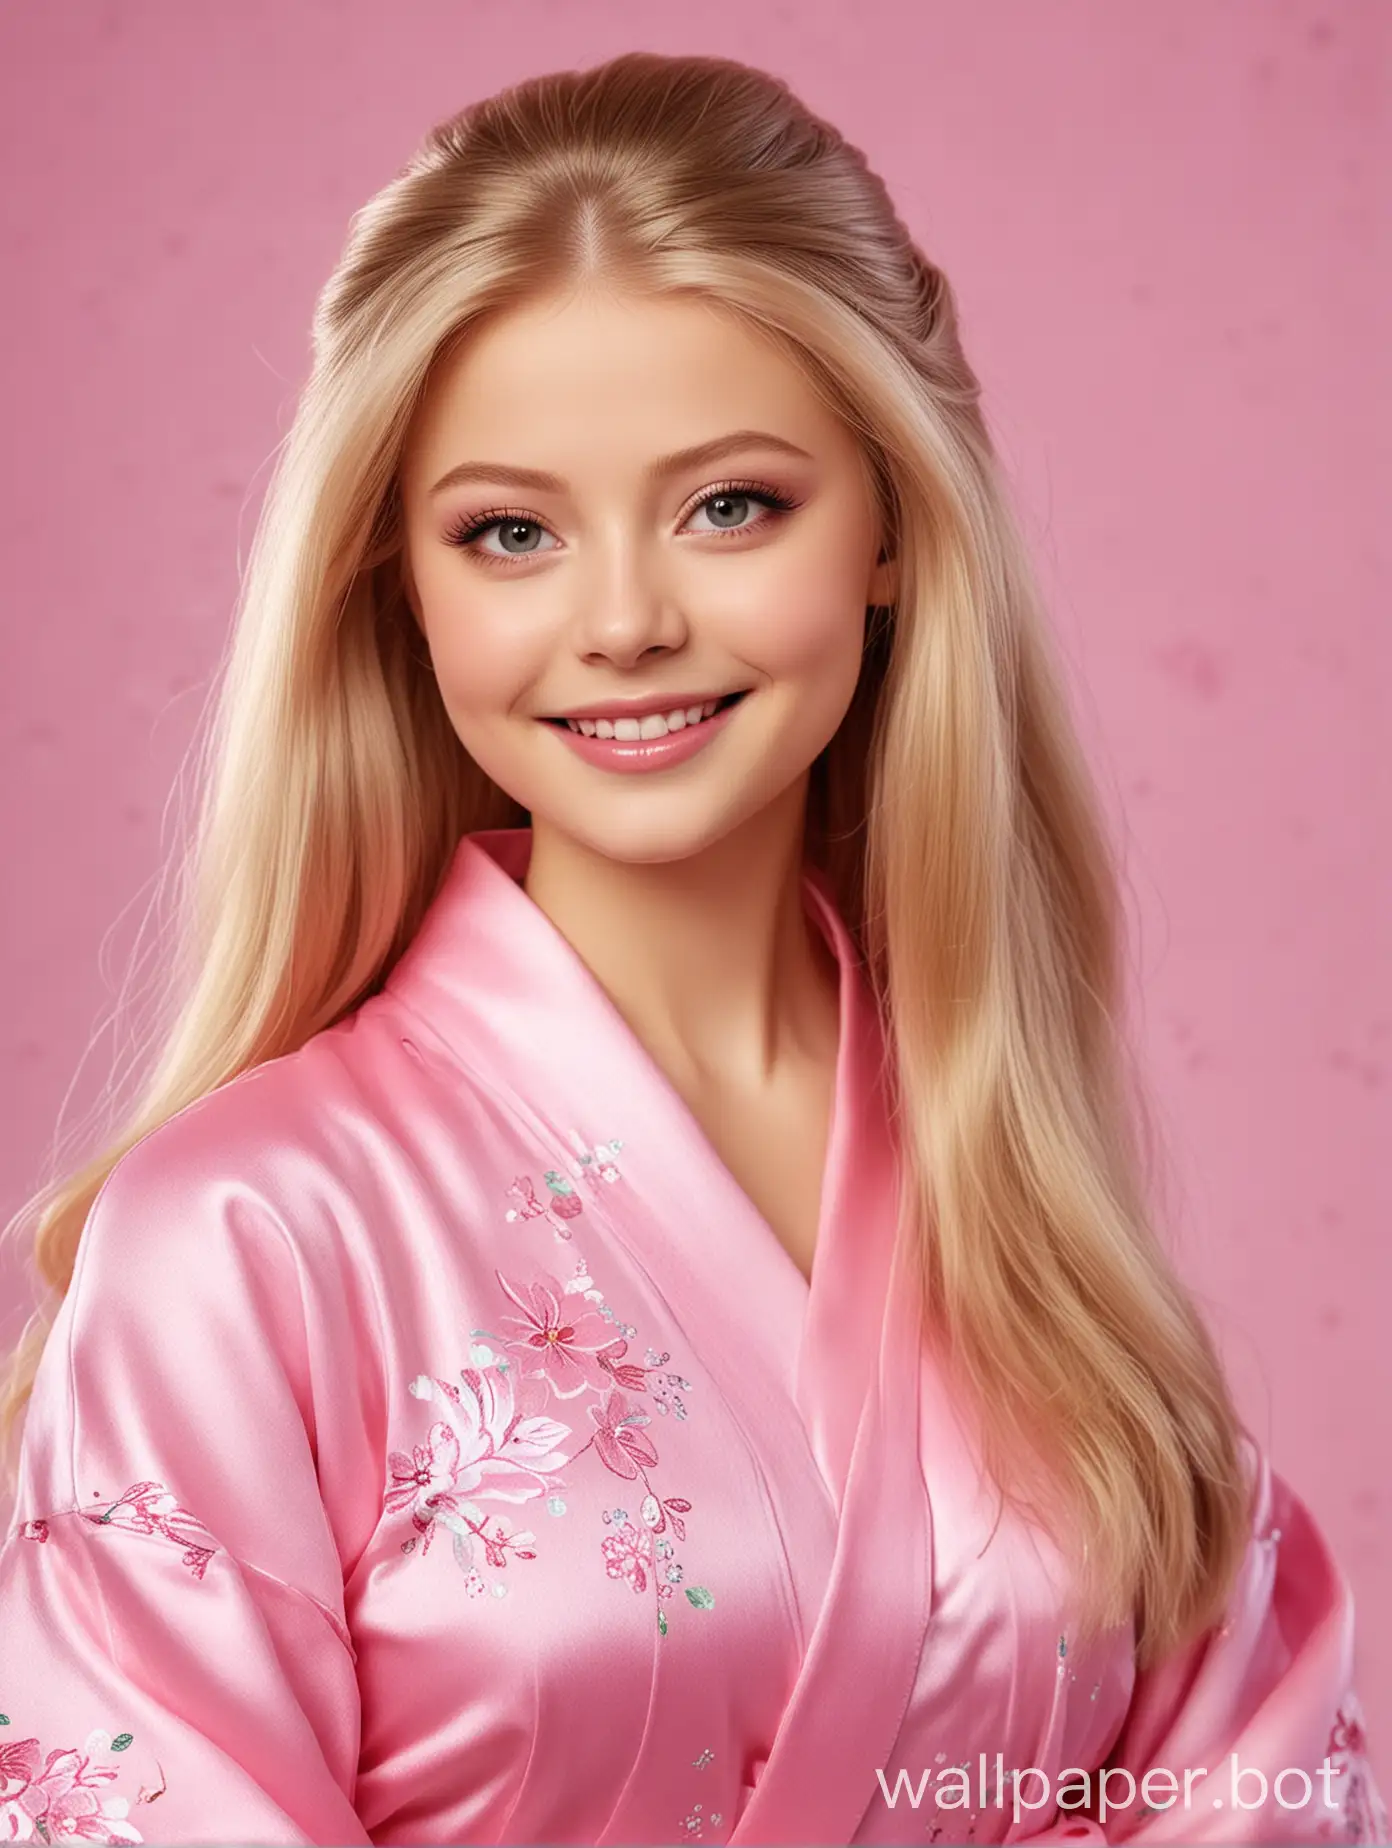 Yuliya Lipnitskaya as Barbie with long silky hair in a pink silk kimono is smiling